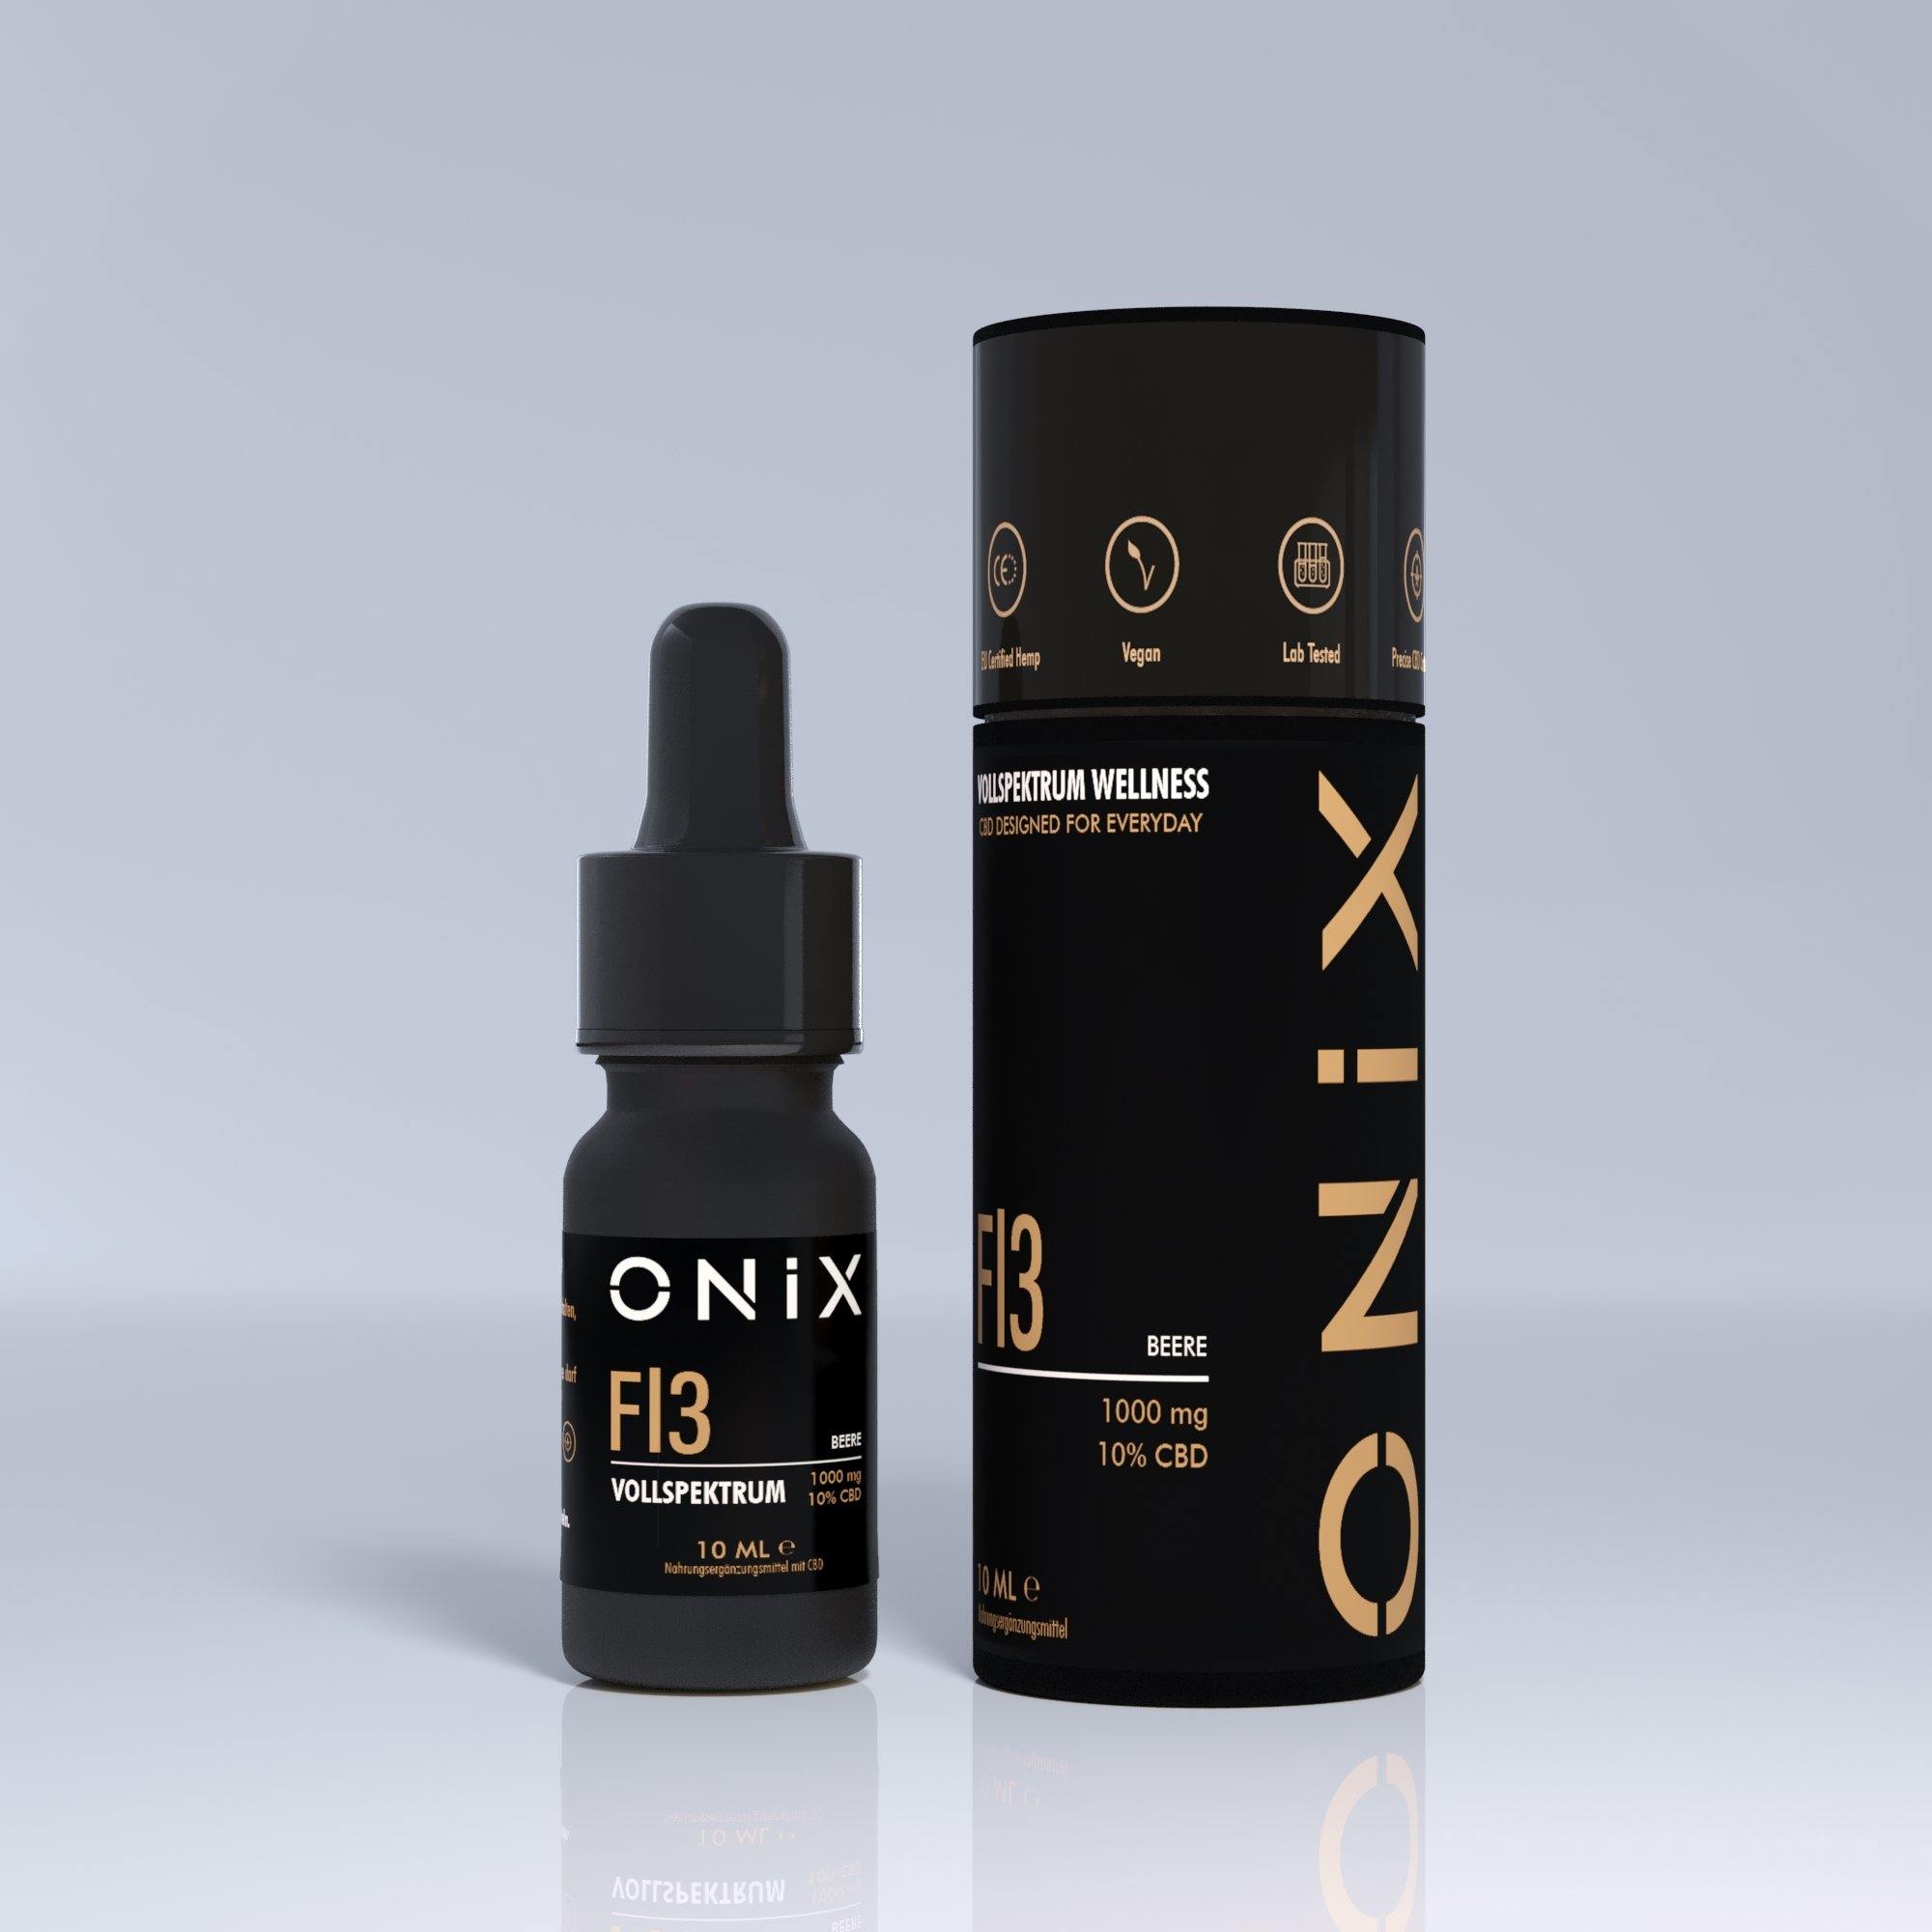 Onix Fl3 CBD Oil 10% Berry Flavour - RxMarkt